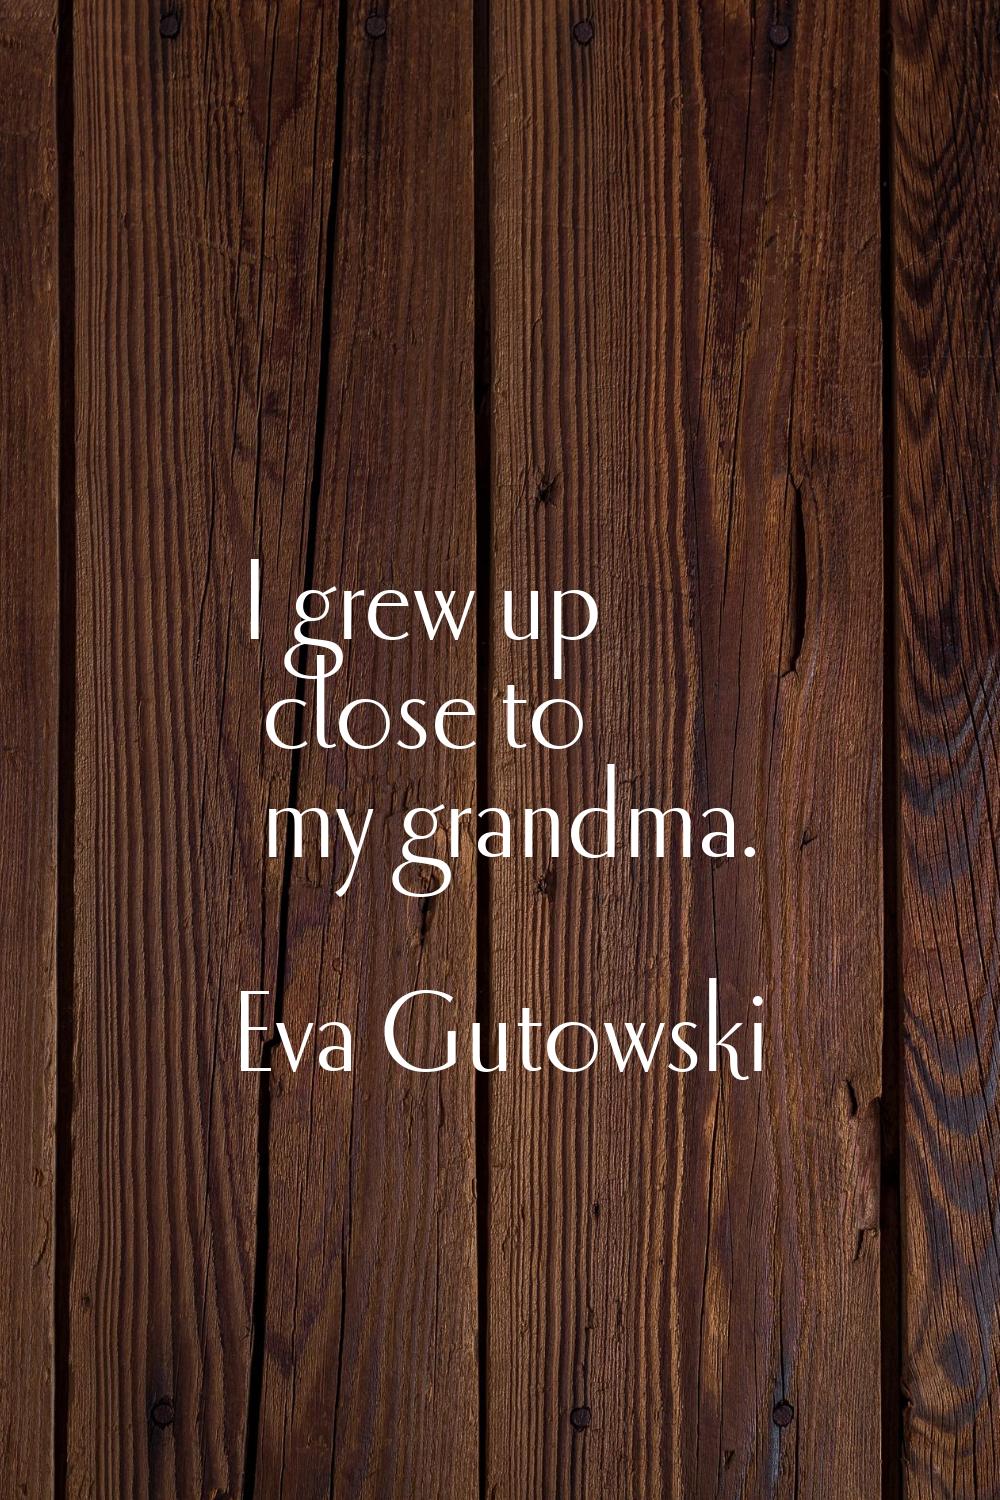 I grew up close to my grandma.